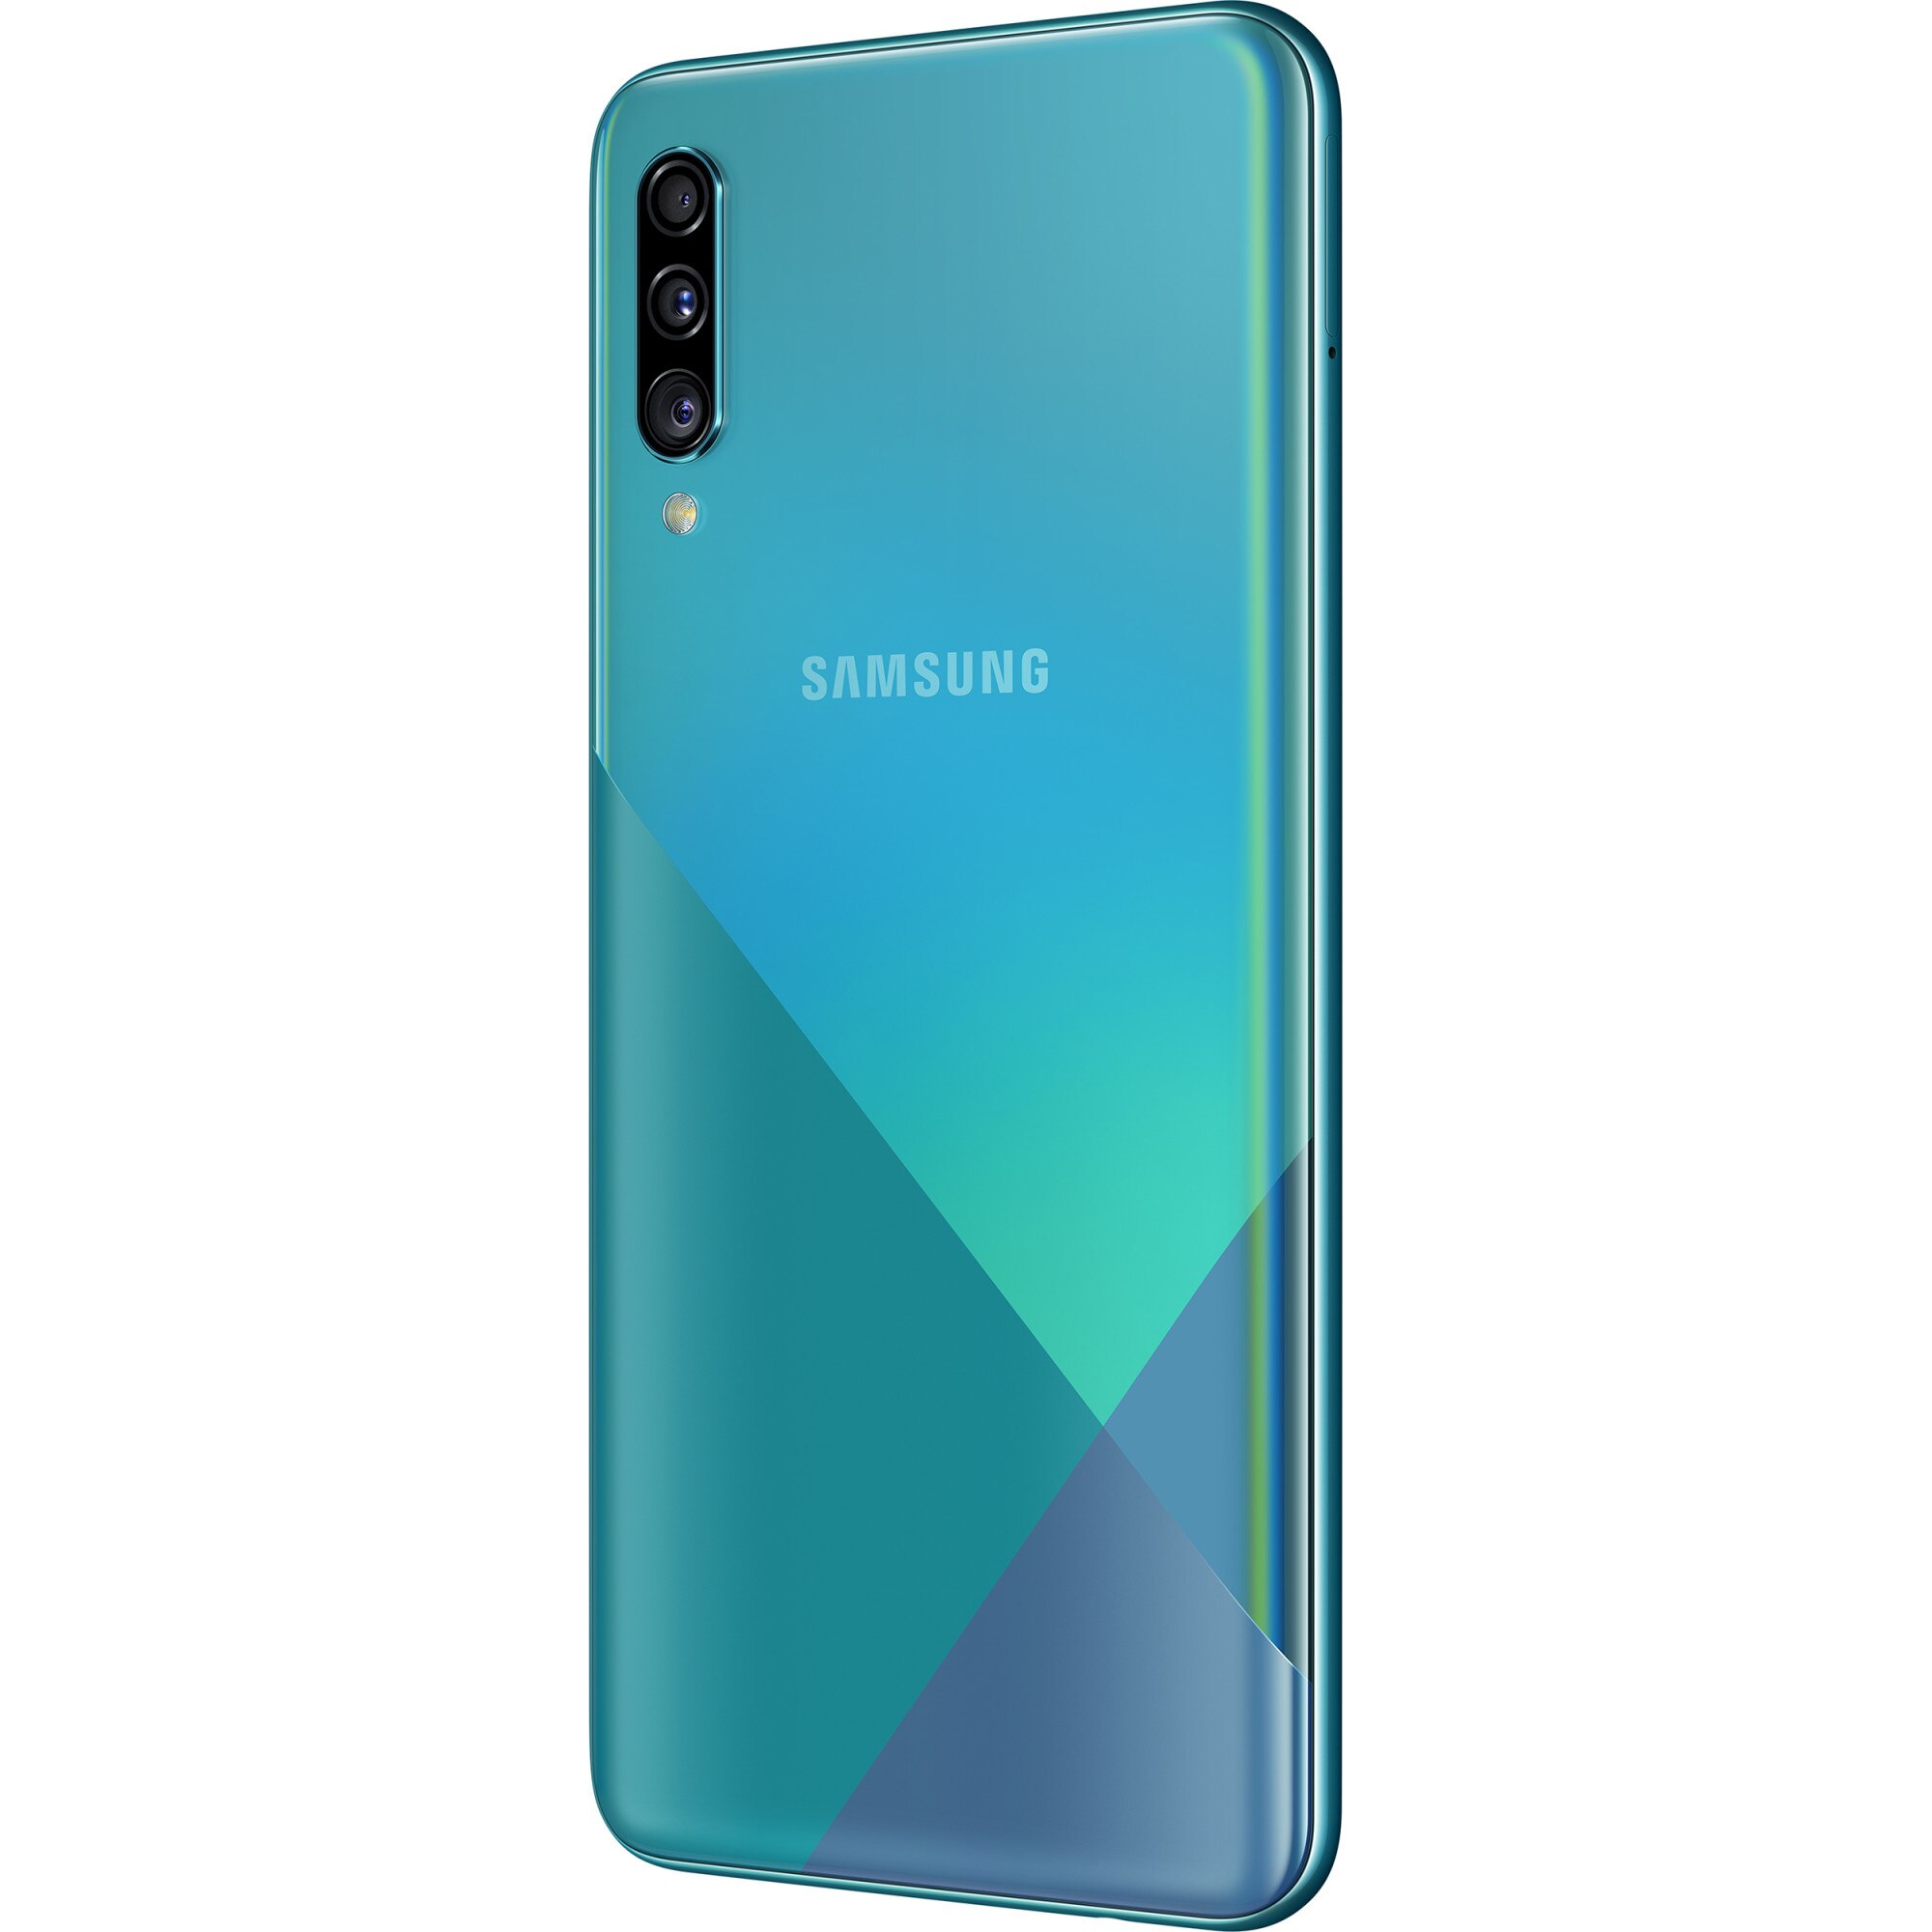 Самсунг а 30 память. Samsung Galaxy a30s 64gb. Самсунг галакси а 30. Samsung Galaxy a30s 128gb. Самсунг галакси а 30s синий.